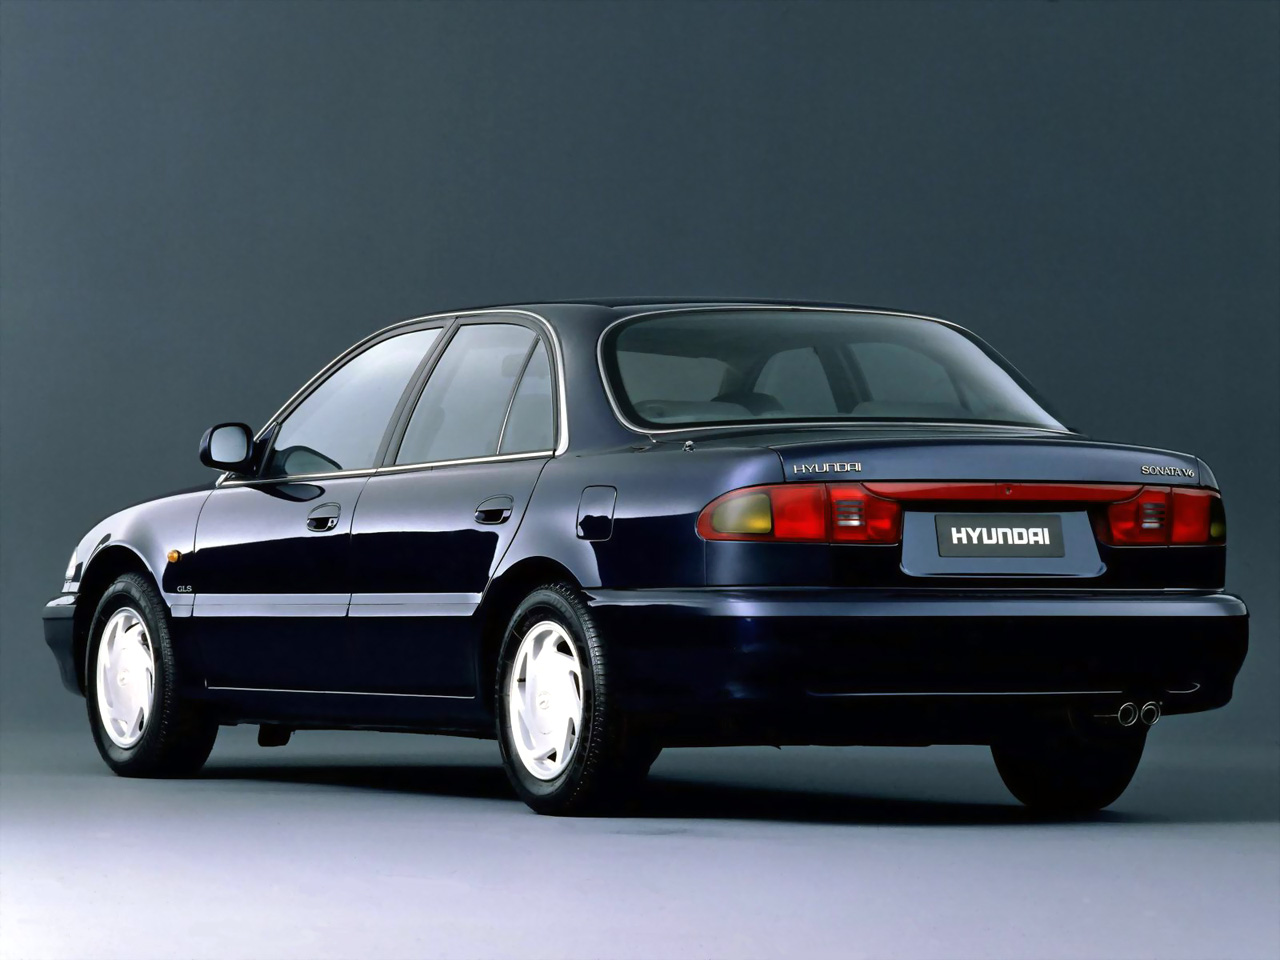 Hyundai Sonata lI 1995 auto-database cars-hyundai-sonata-ii-y-3-1995-195995